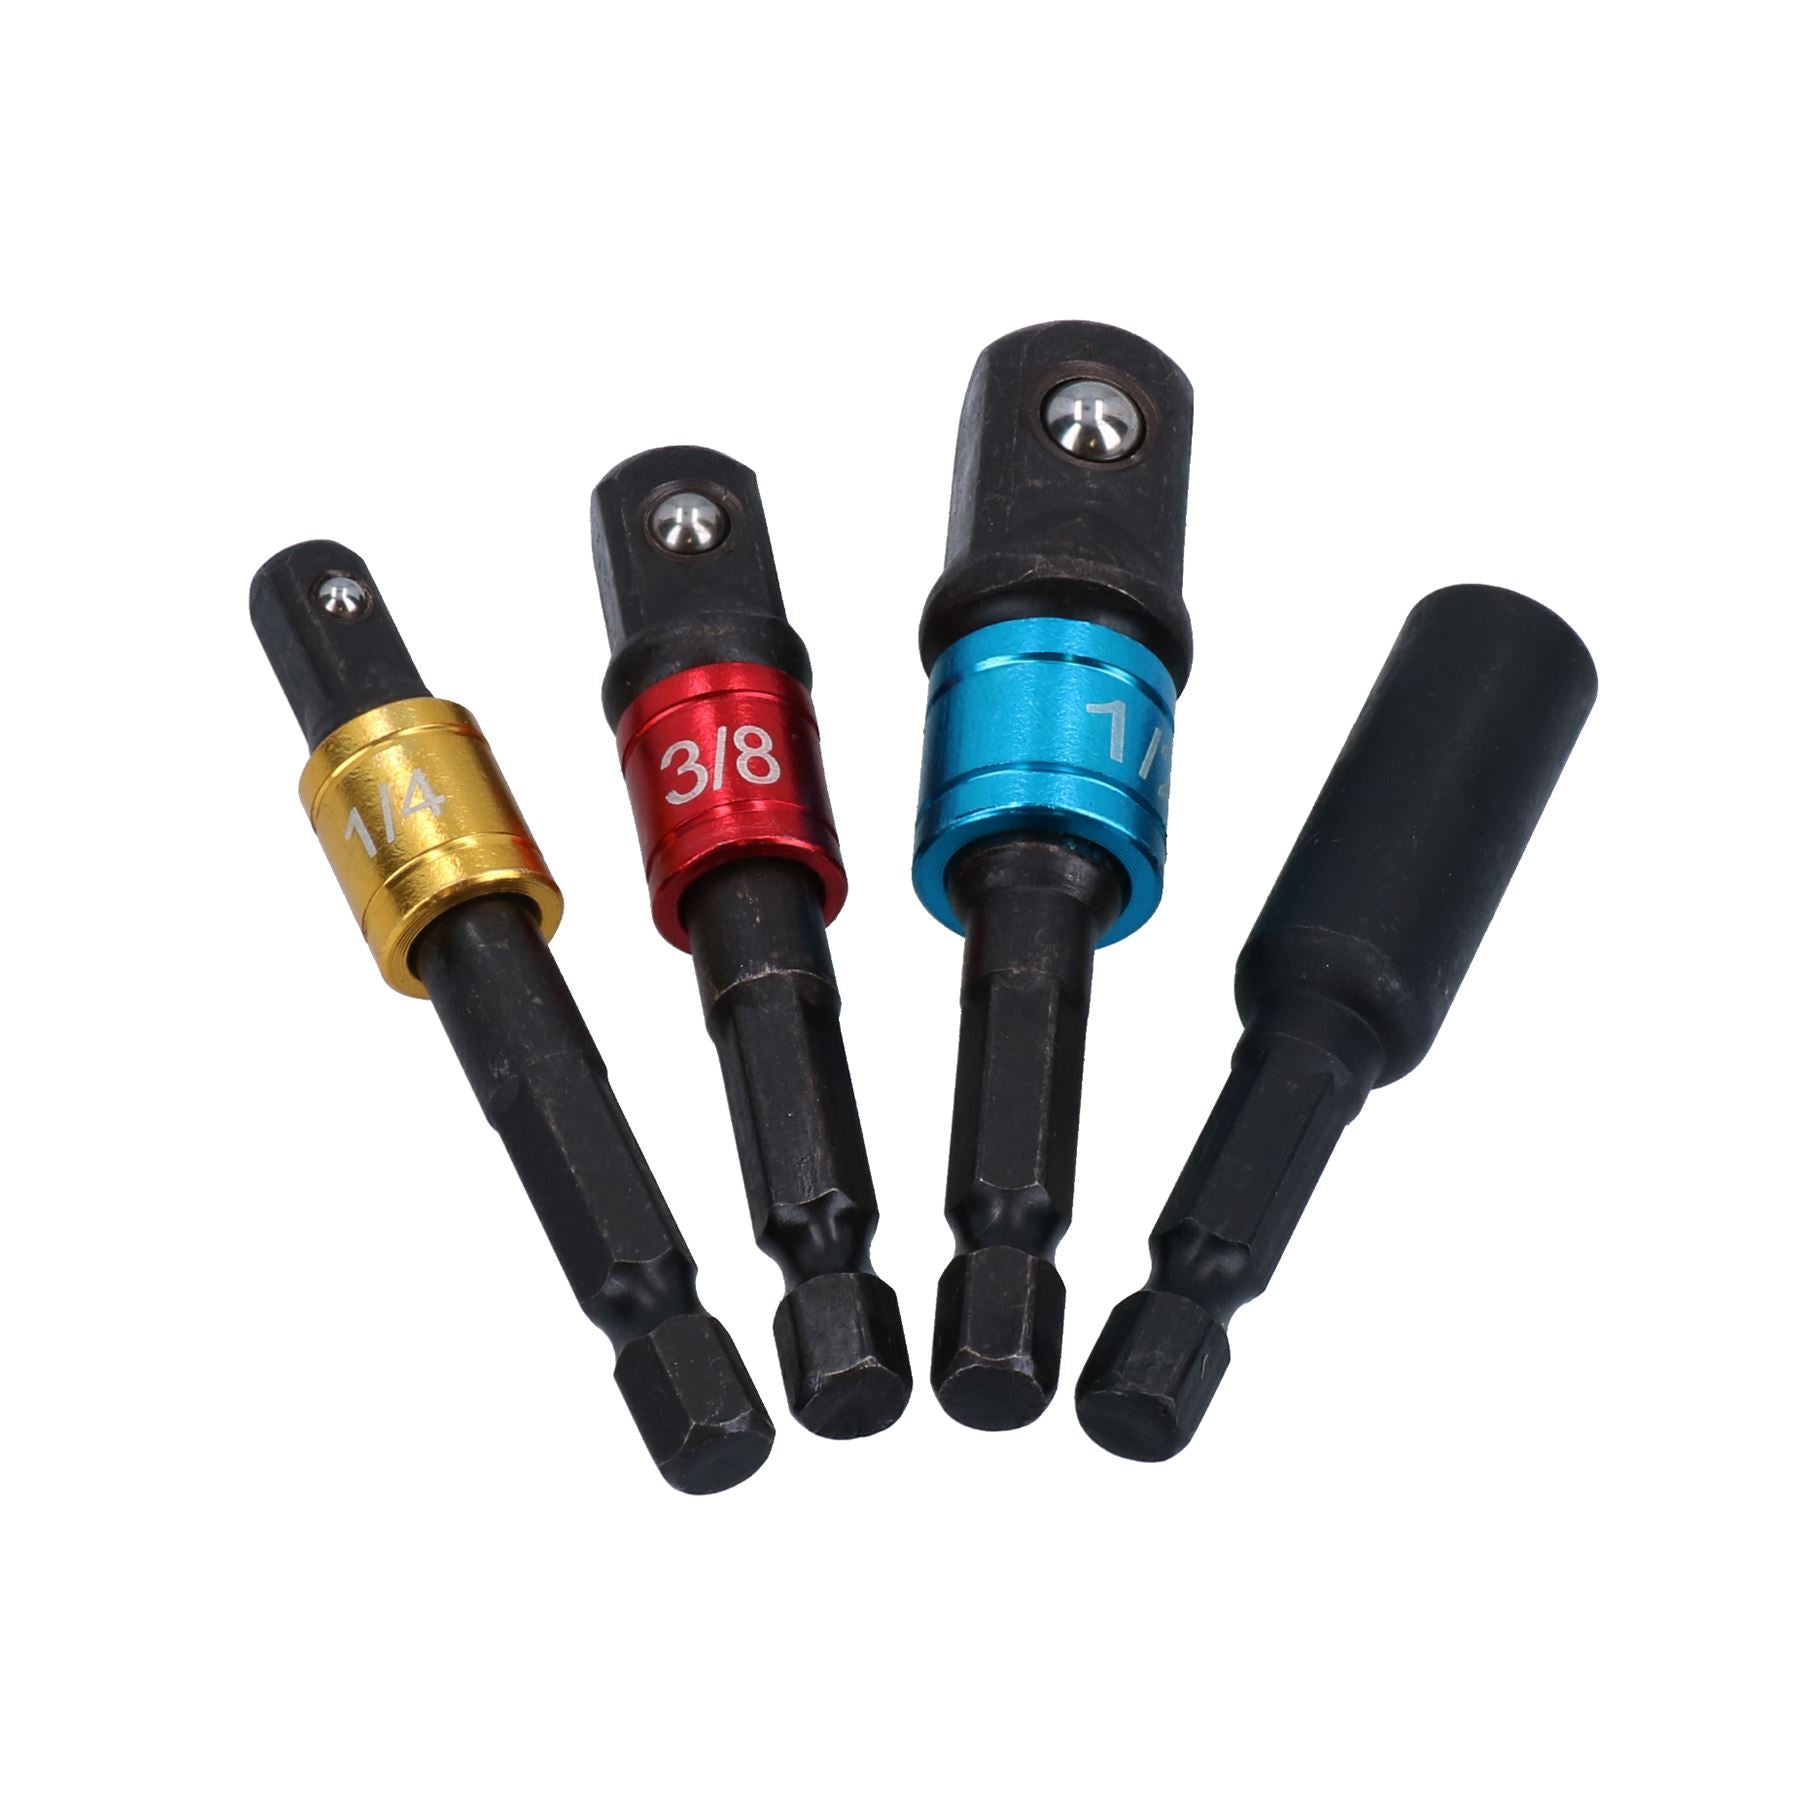 Impact Allen Hex Socket Driver Adapters 1/4" 3/8" + 1/2" + Magnetic Bit Holder